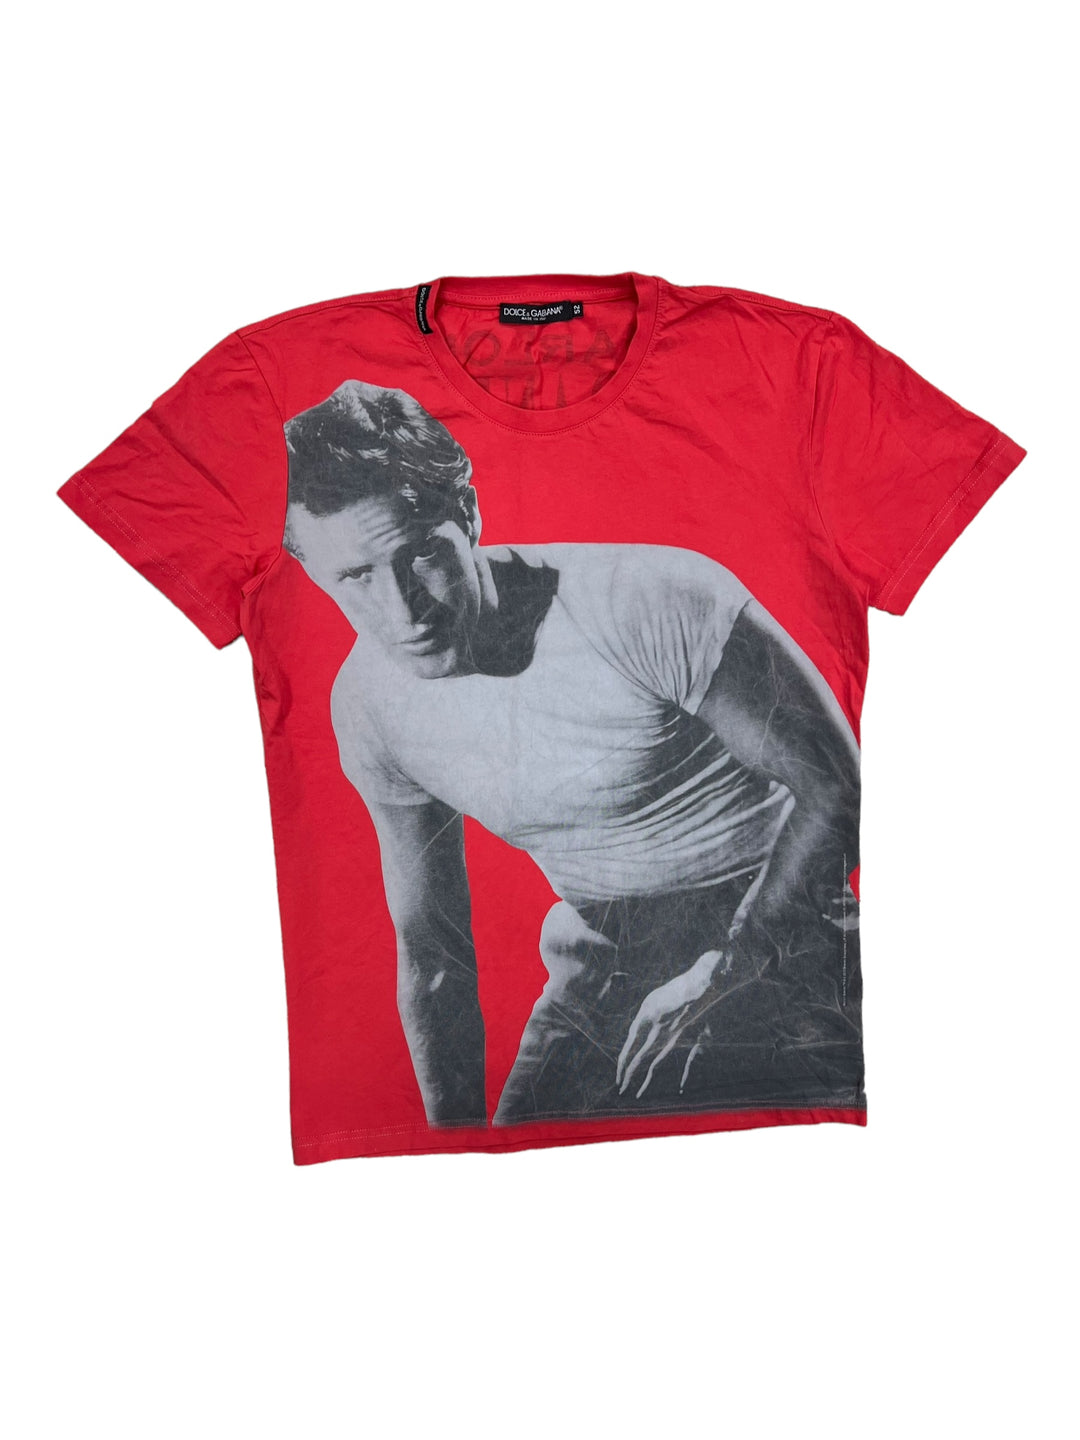 Dolce & Gabbana Marlon Brando print T-shirt Men’s small